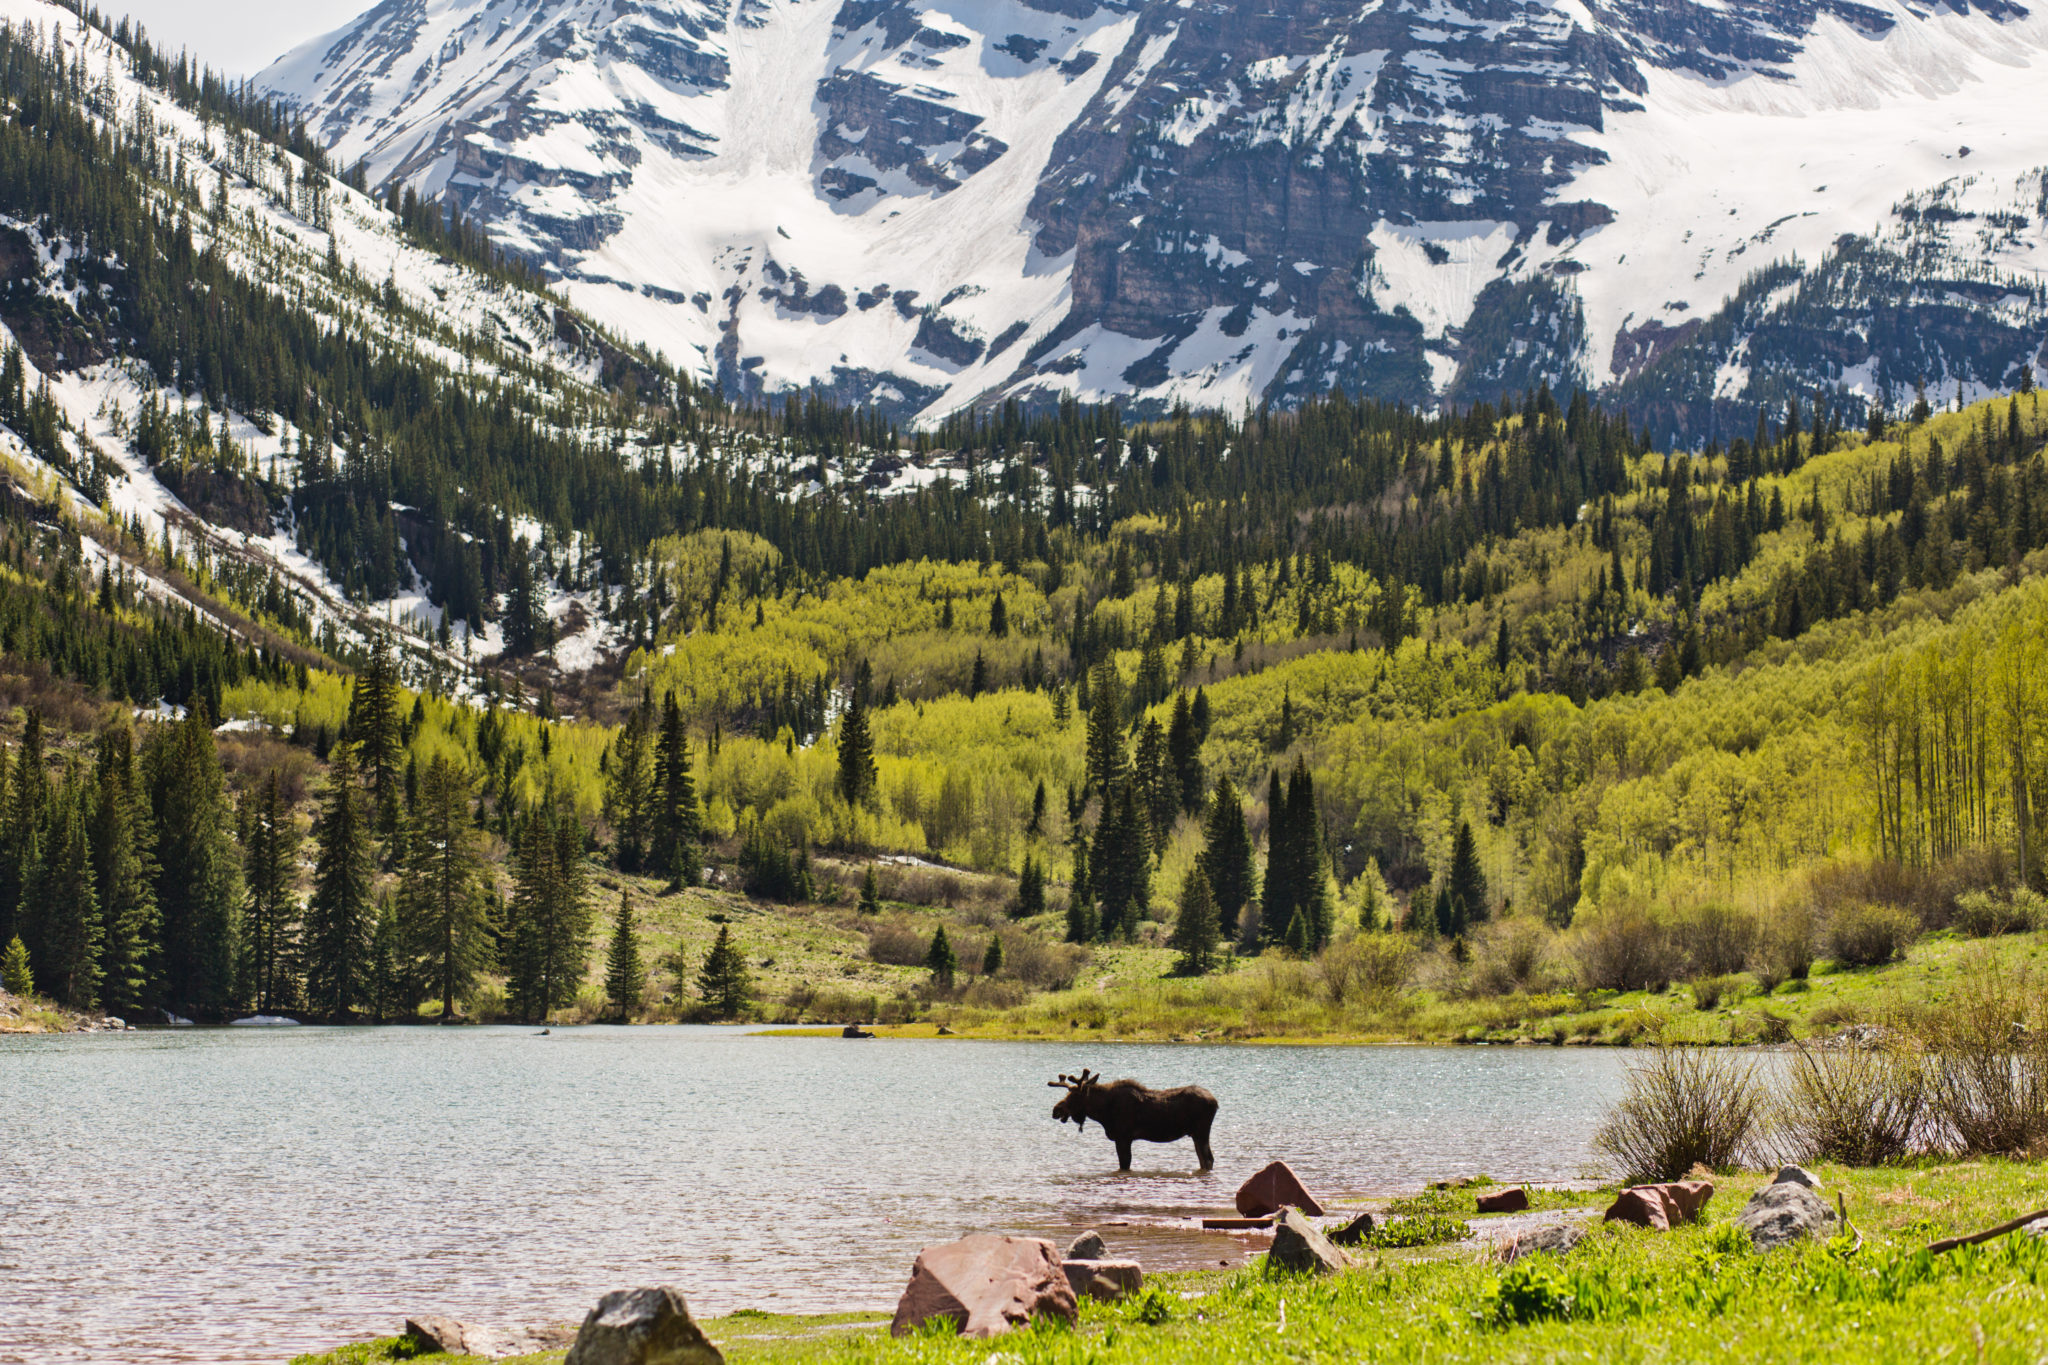 moose in a mountain lake